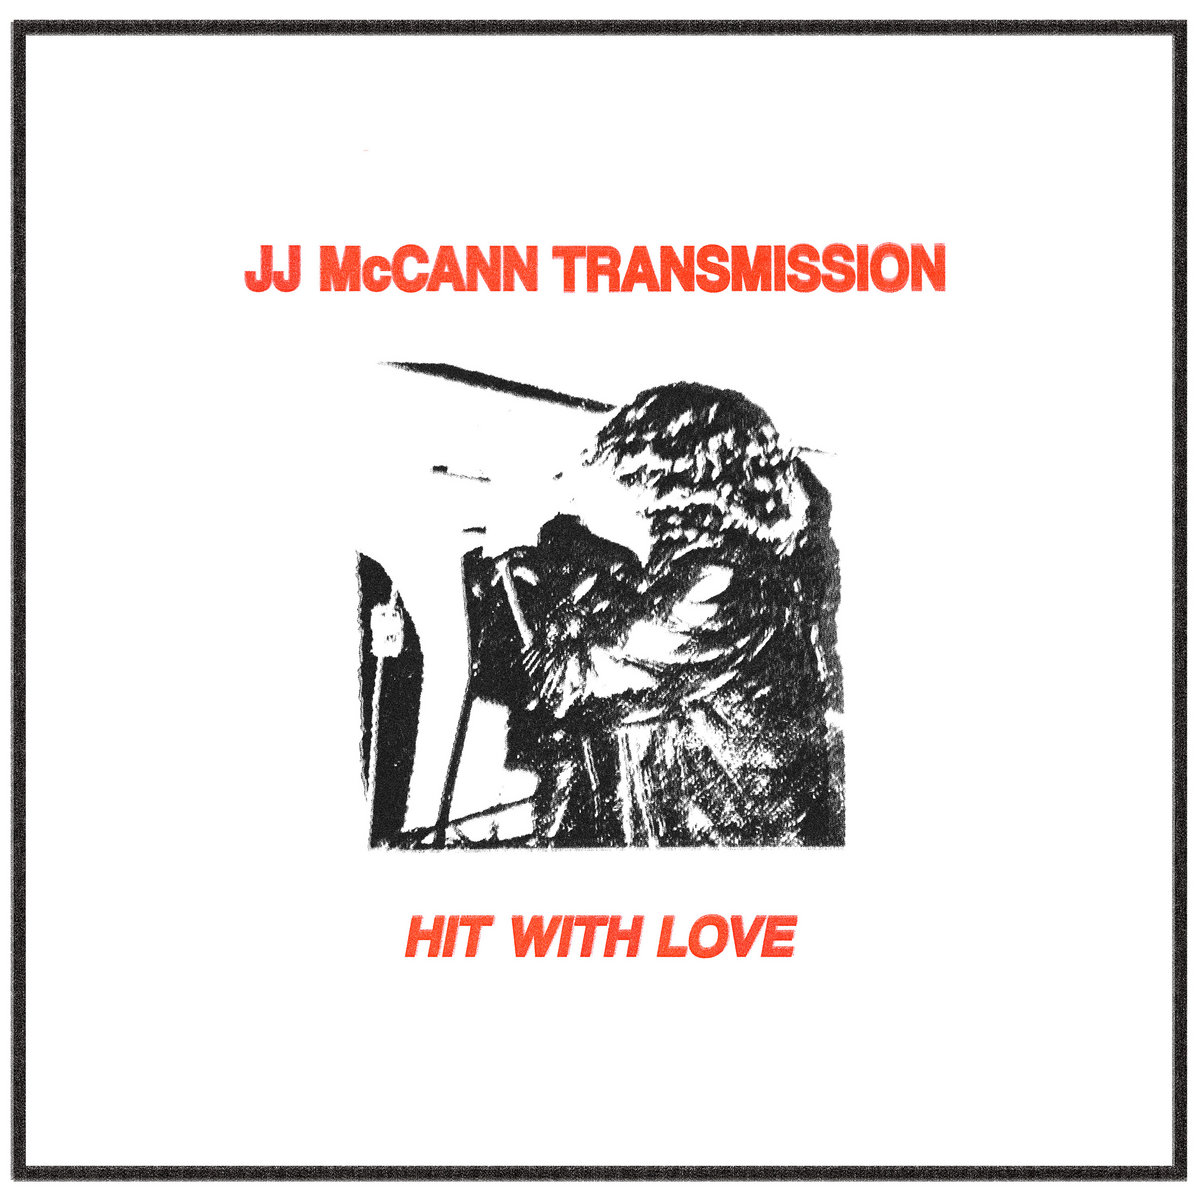 JJ McCann Transmission, Hit With Love vinyl sleeve